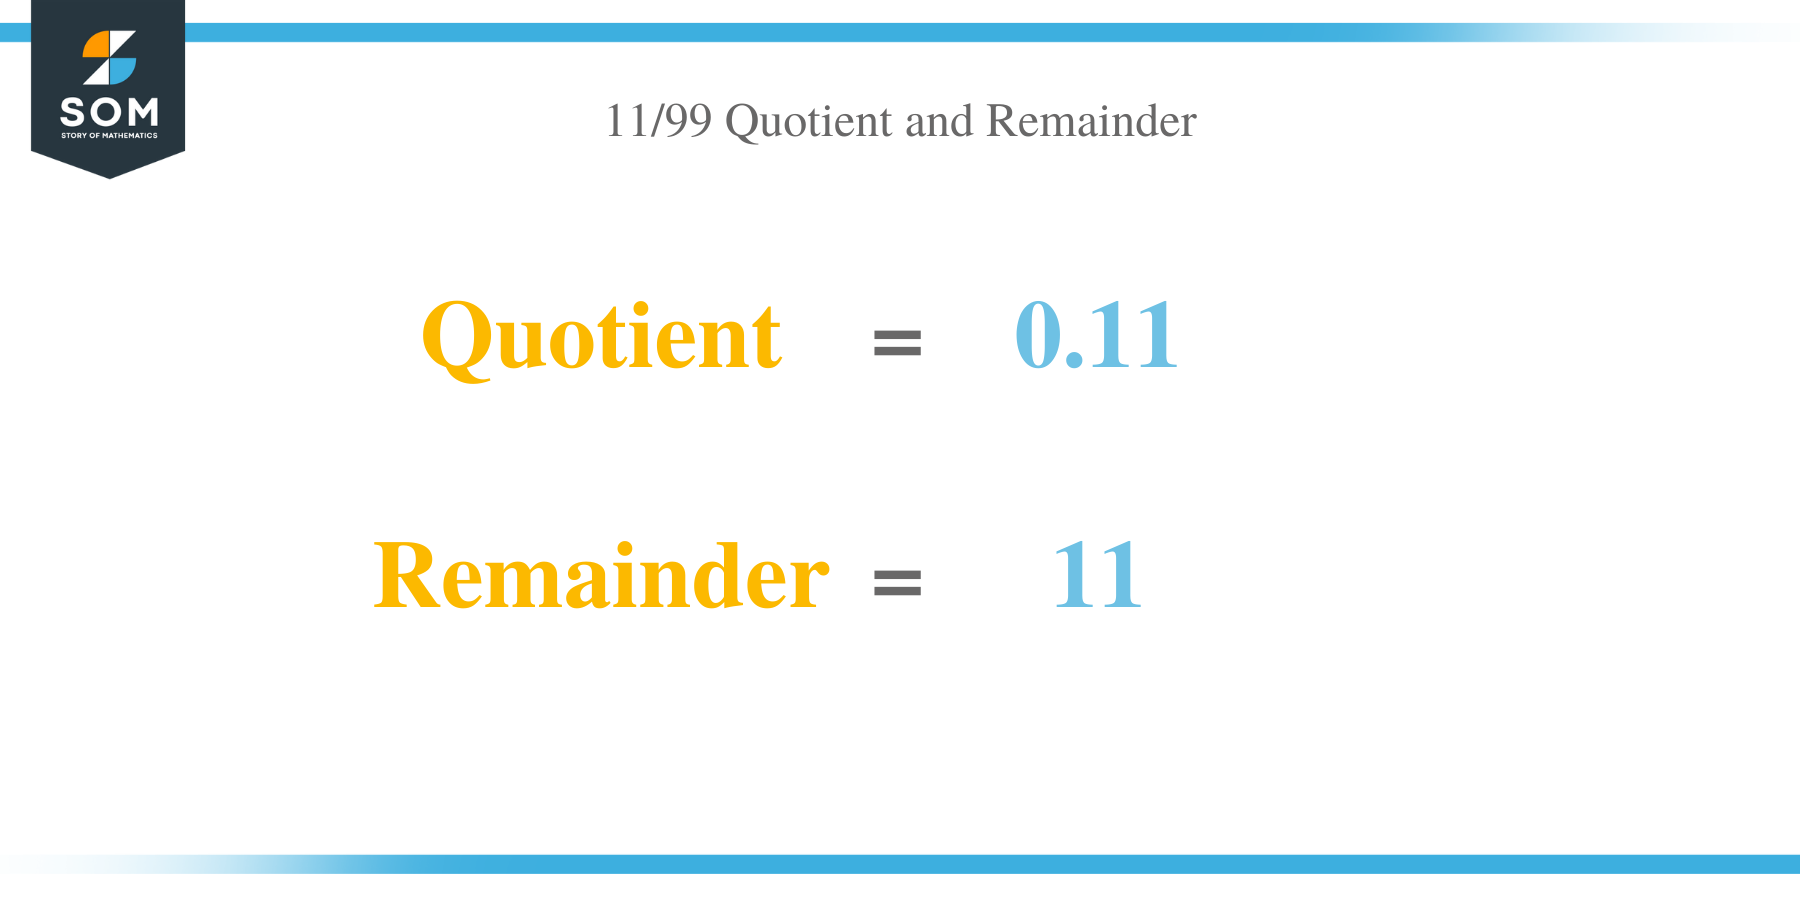 Quotient and Remainder of 11 per 99